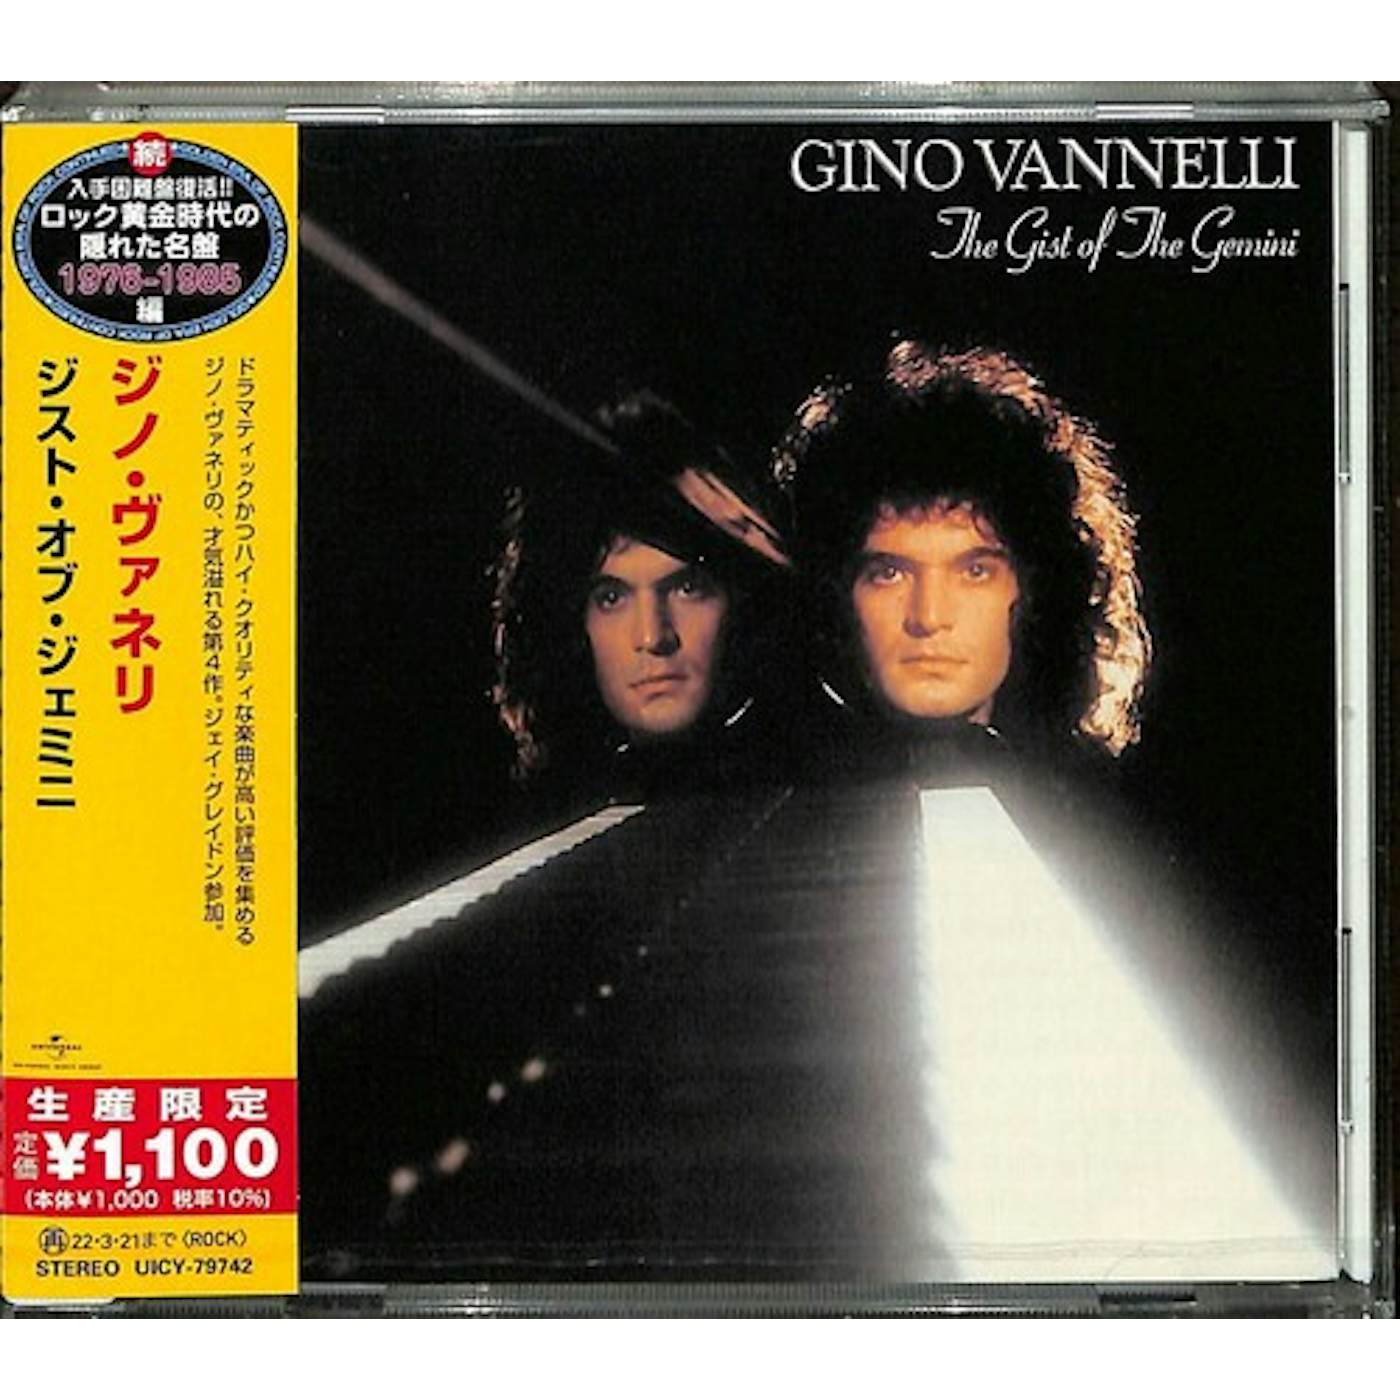 Gino Vannelli GIST OF THE GEMINI CD